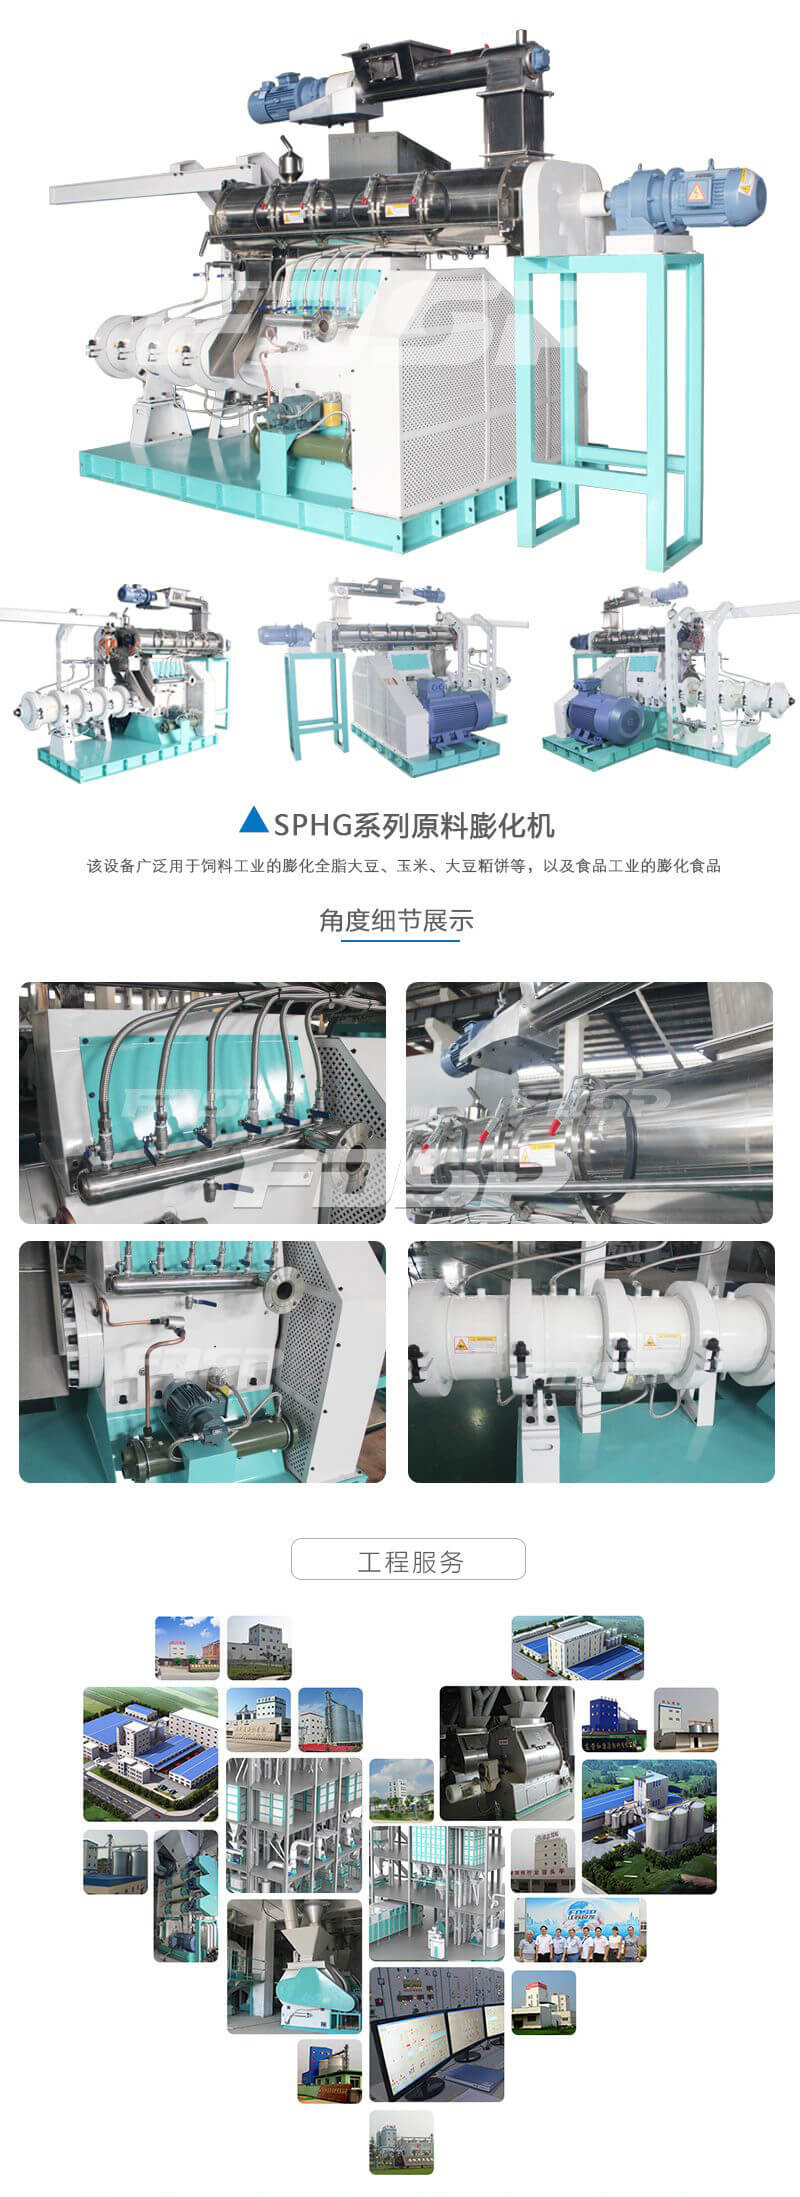 SPHG系列原料膨化机